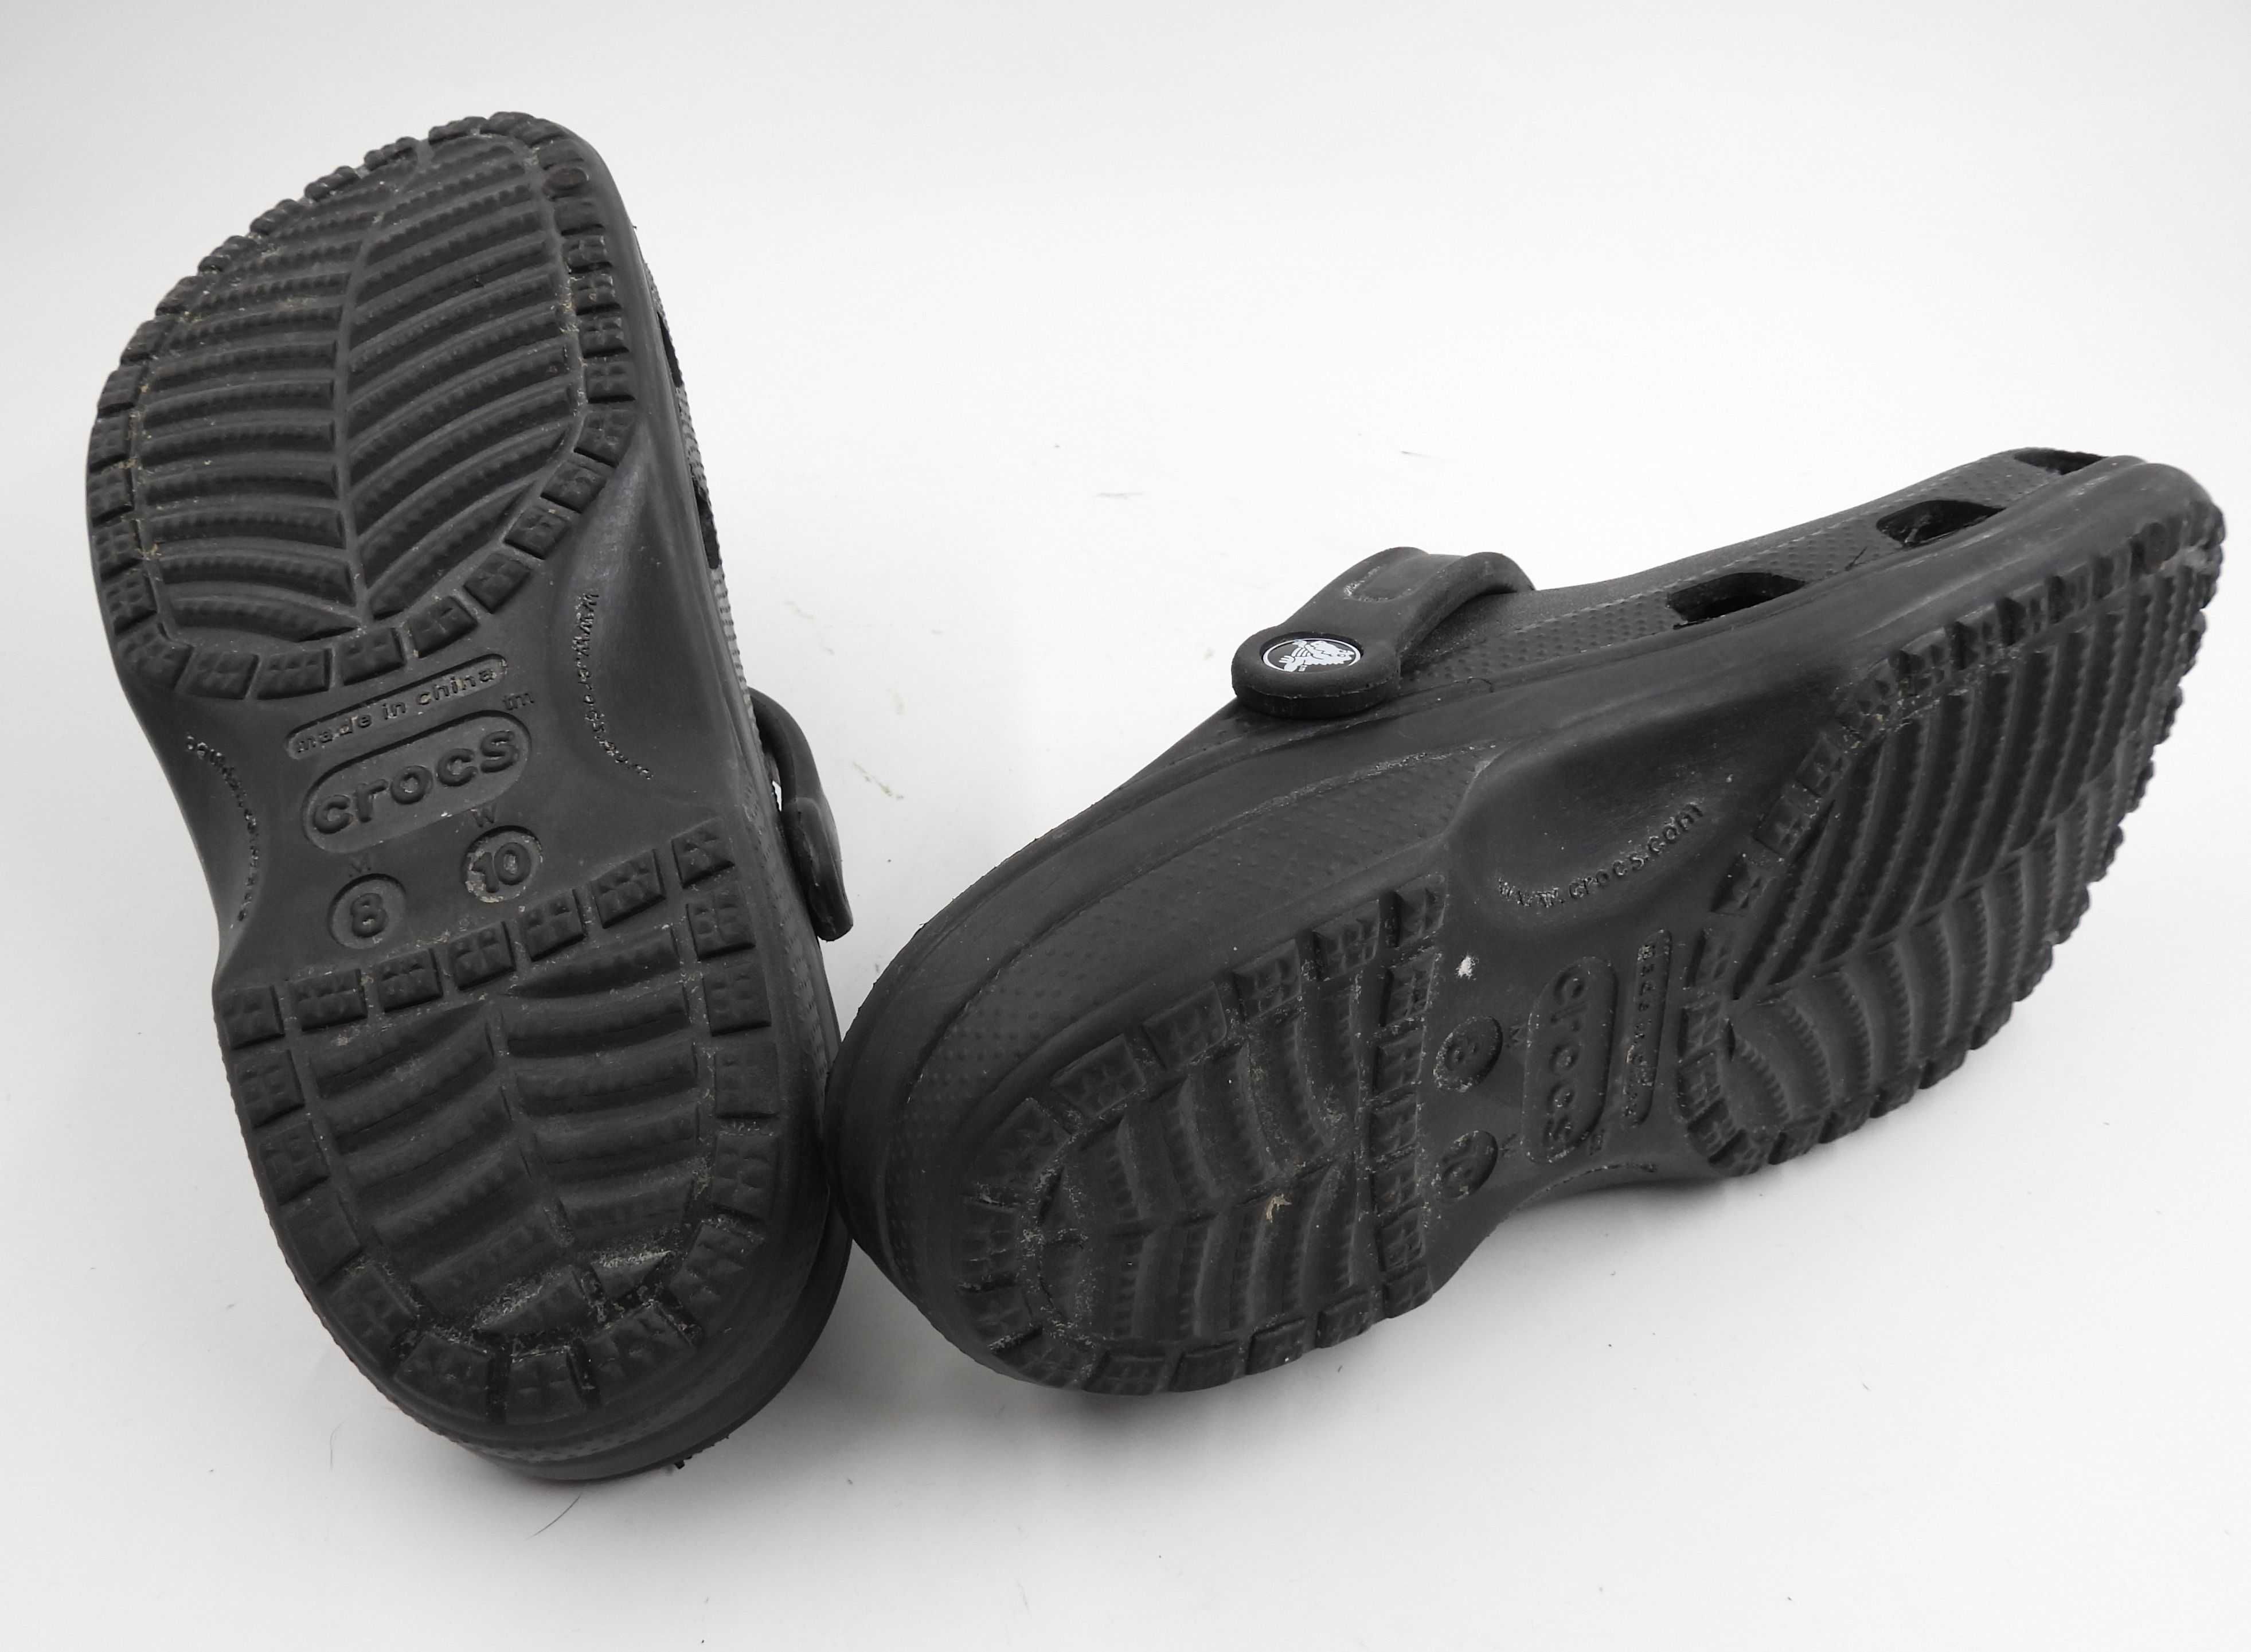 Crocs czarne klapki unisex 41 - 26,5 cm